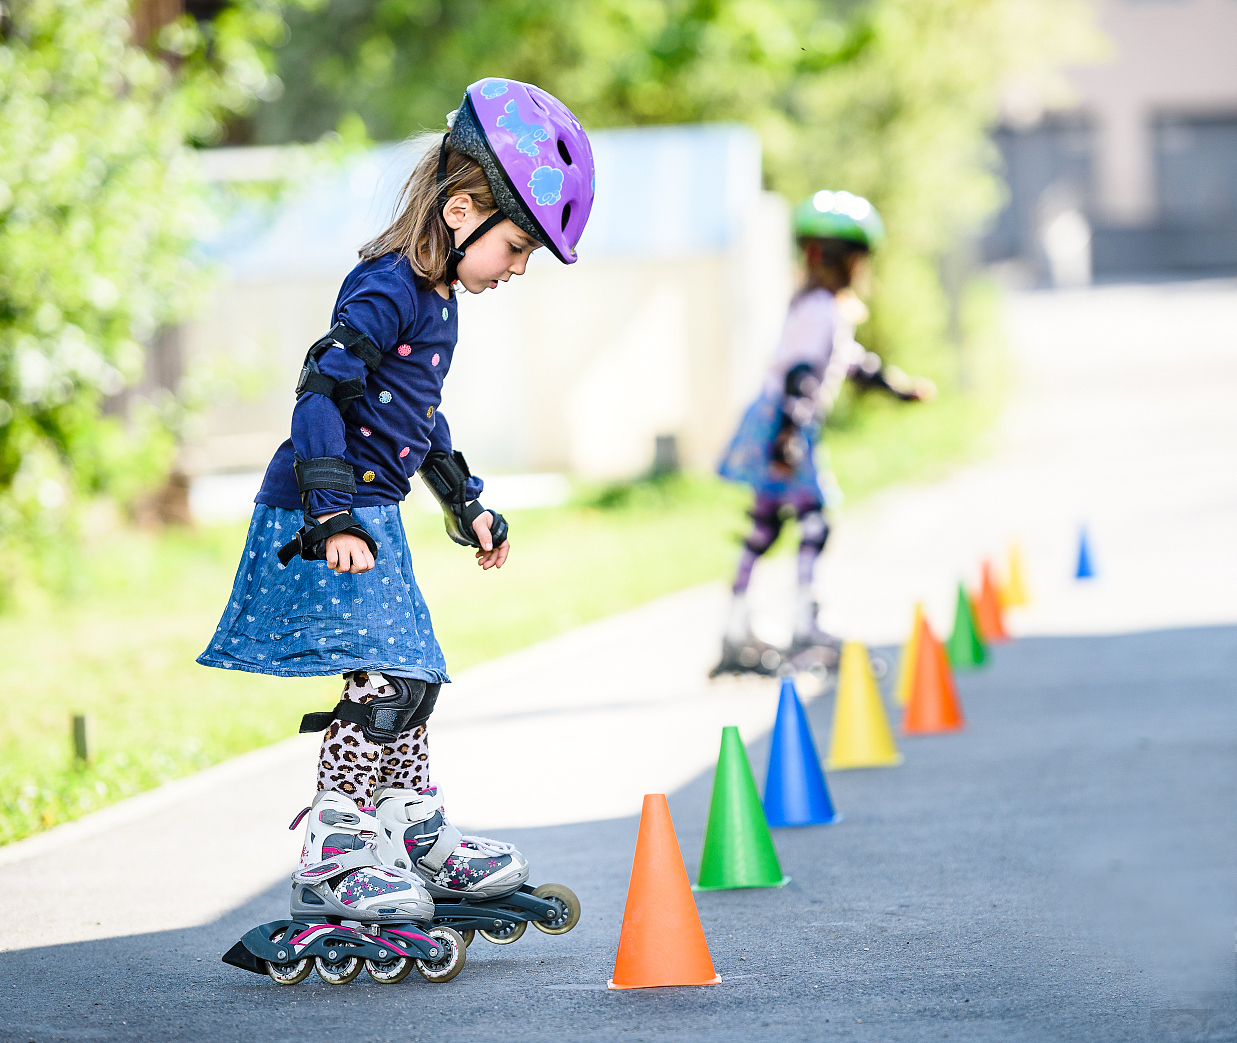 Solex轮滑鞋，让孩子享受户外运动的快乐